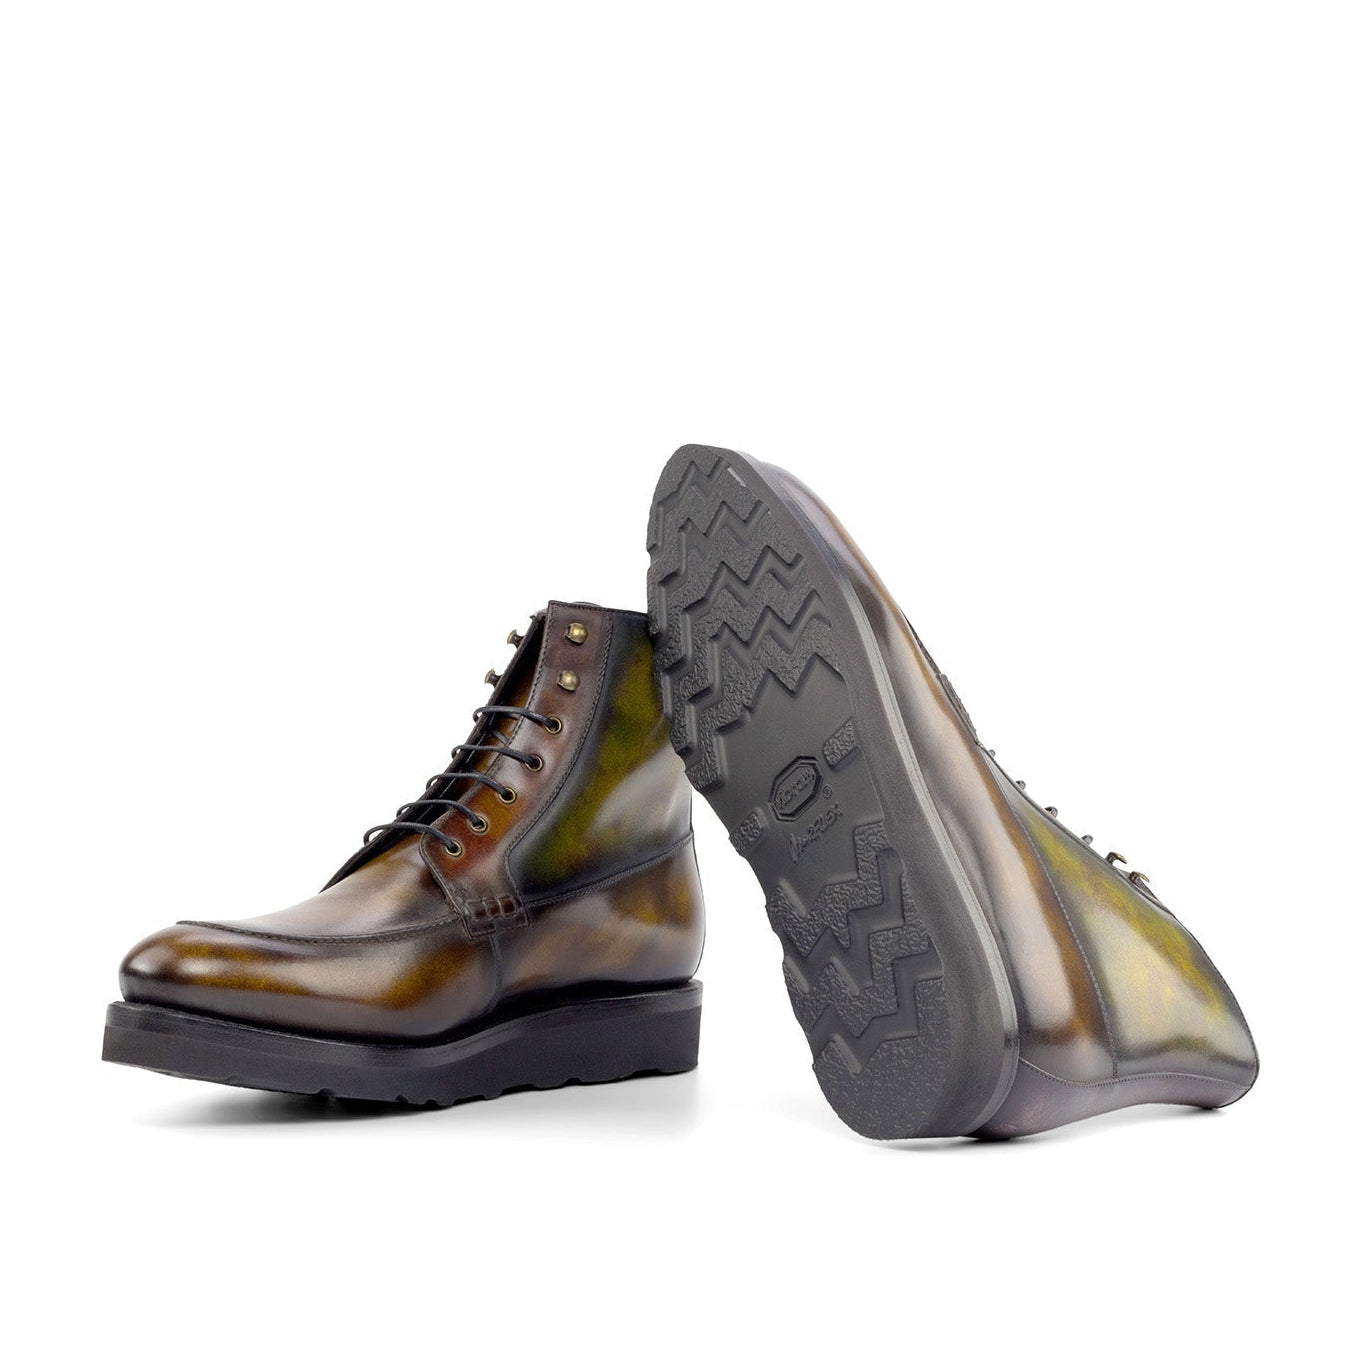 Ambrogio Bespoke Custom Men's Shoes White & Tri-Tone Blue Fabric / Crocodile Print / Calf-Skin Leather Sneakers (AMB1951)